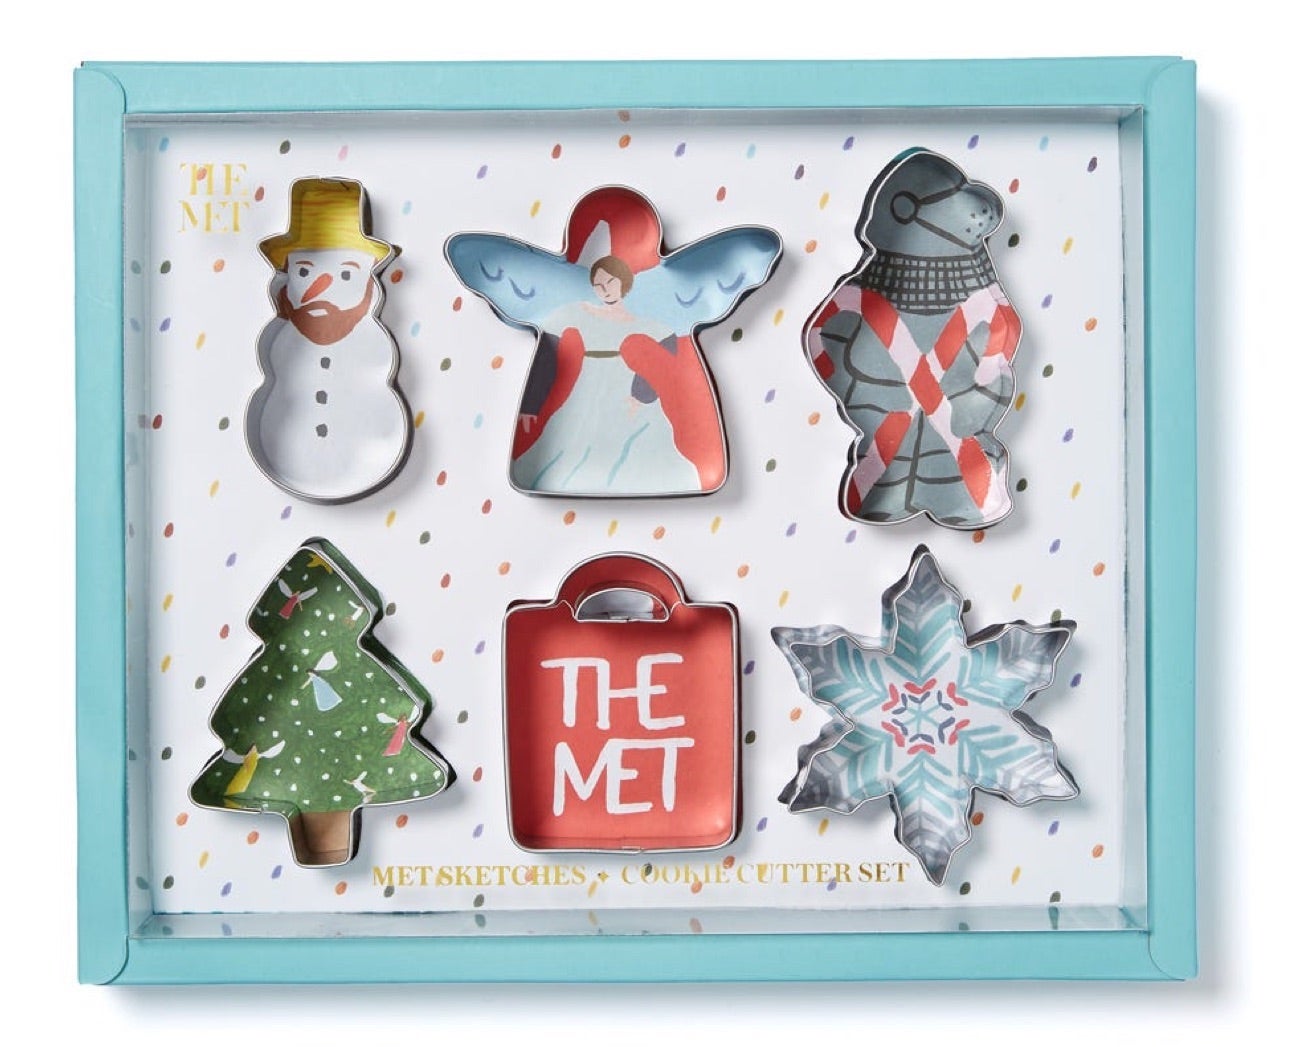 Met Sketches: Christmas Cookie Cutters Set